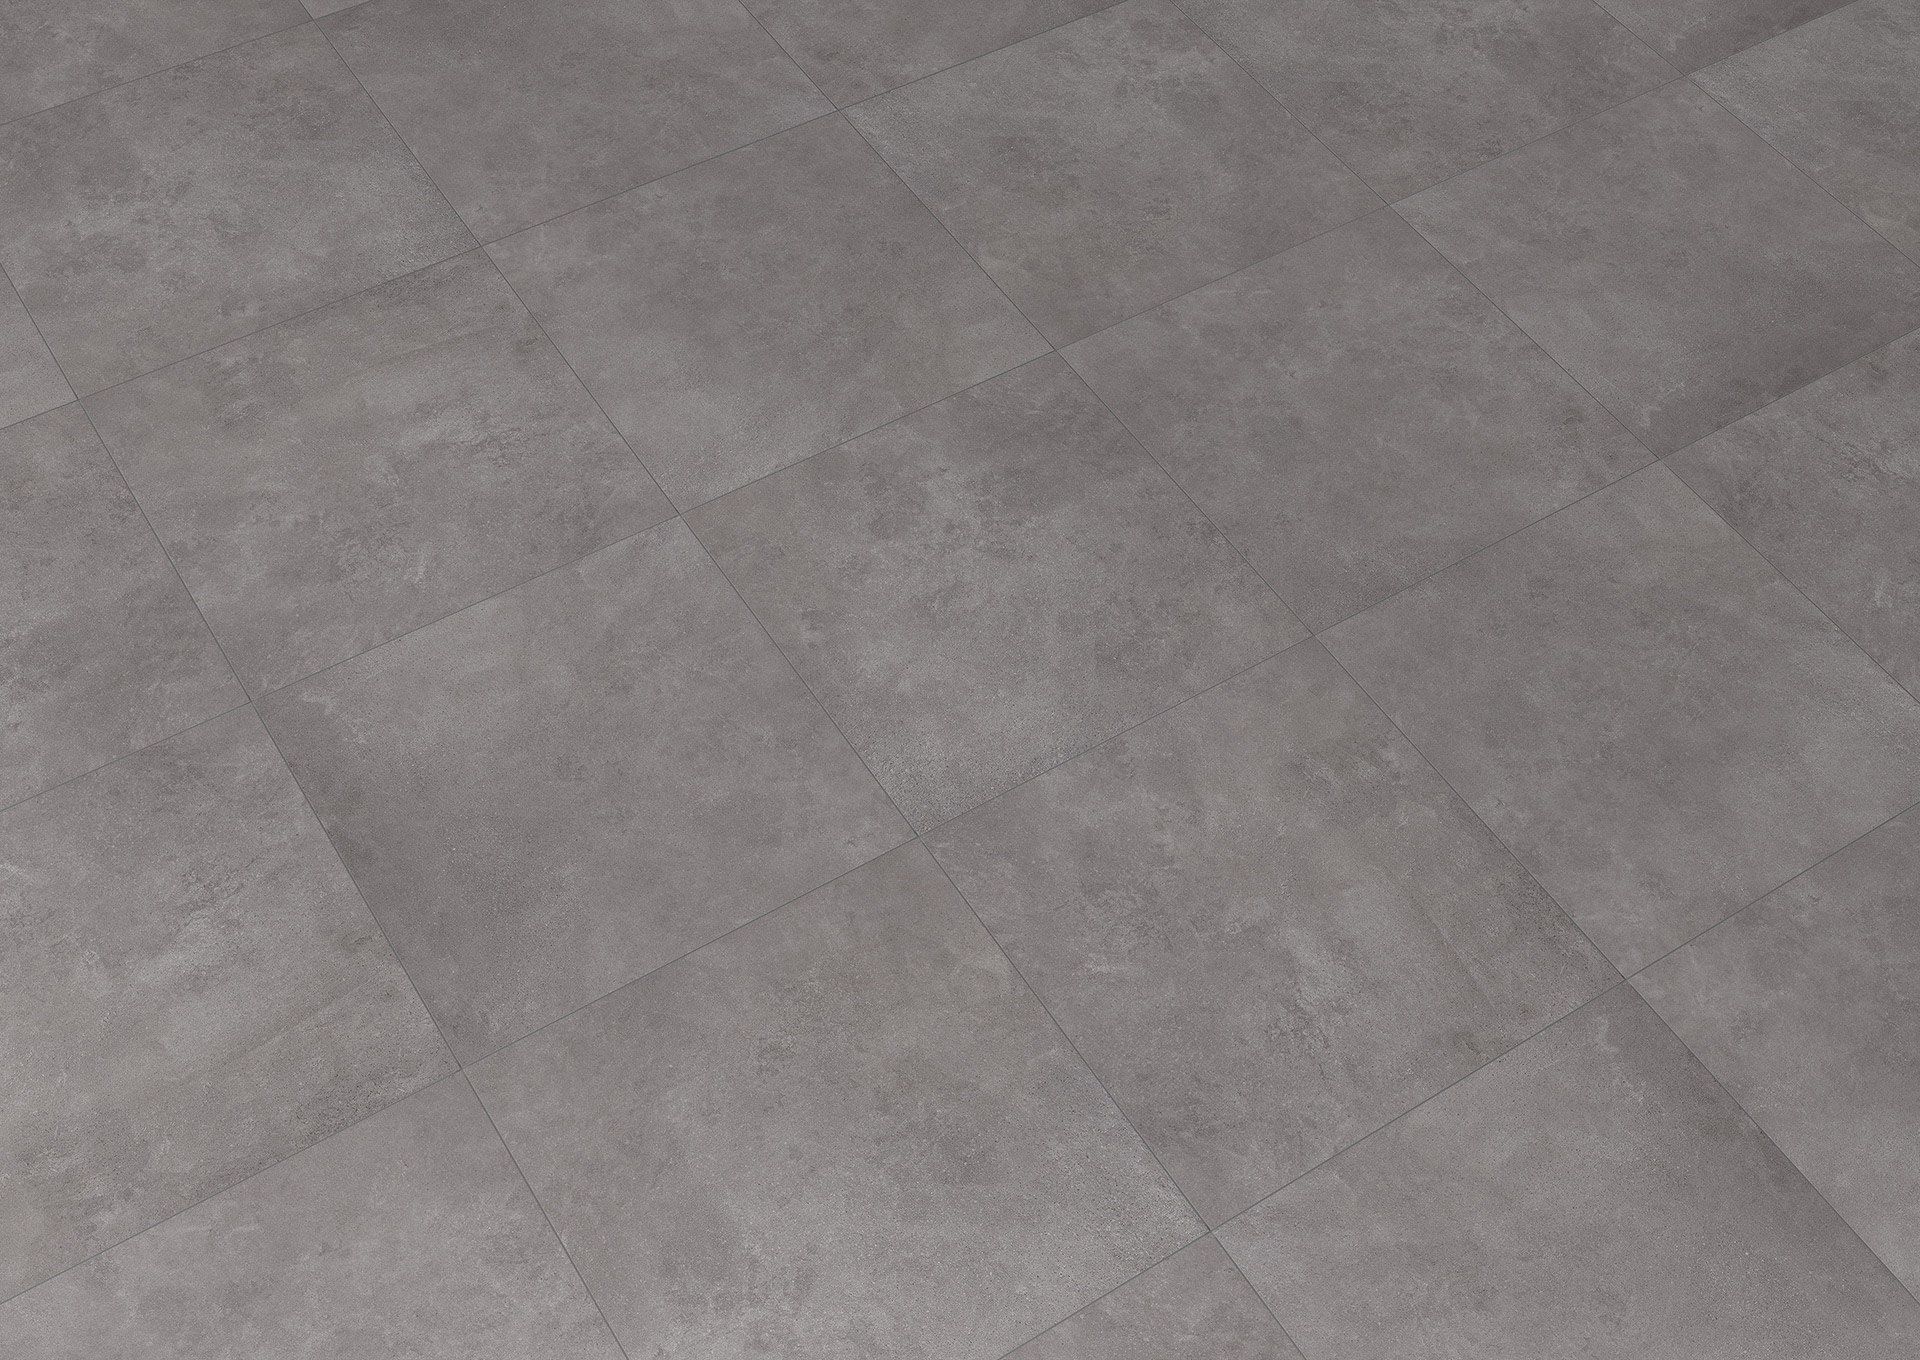 Duncan grey 60x60 flooring